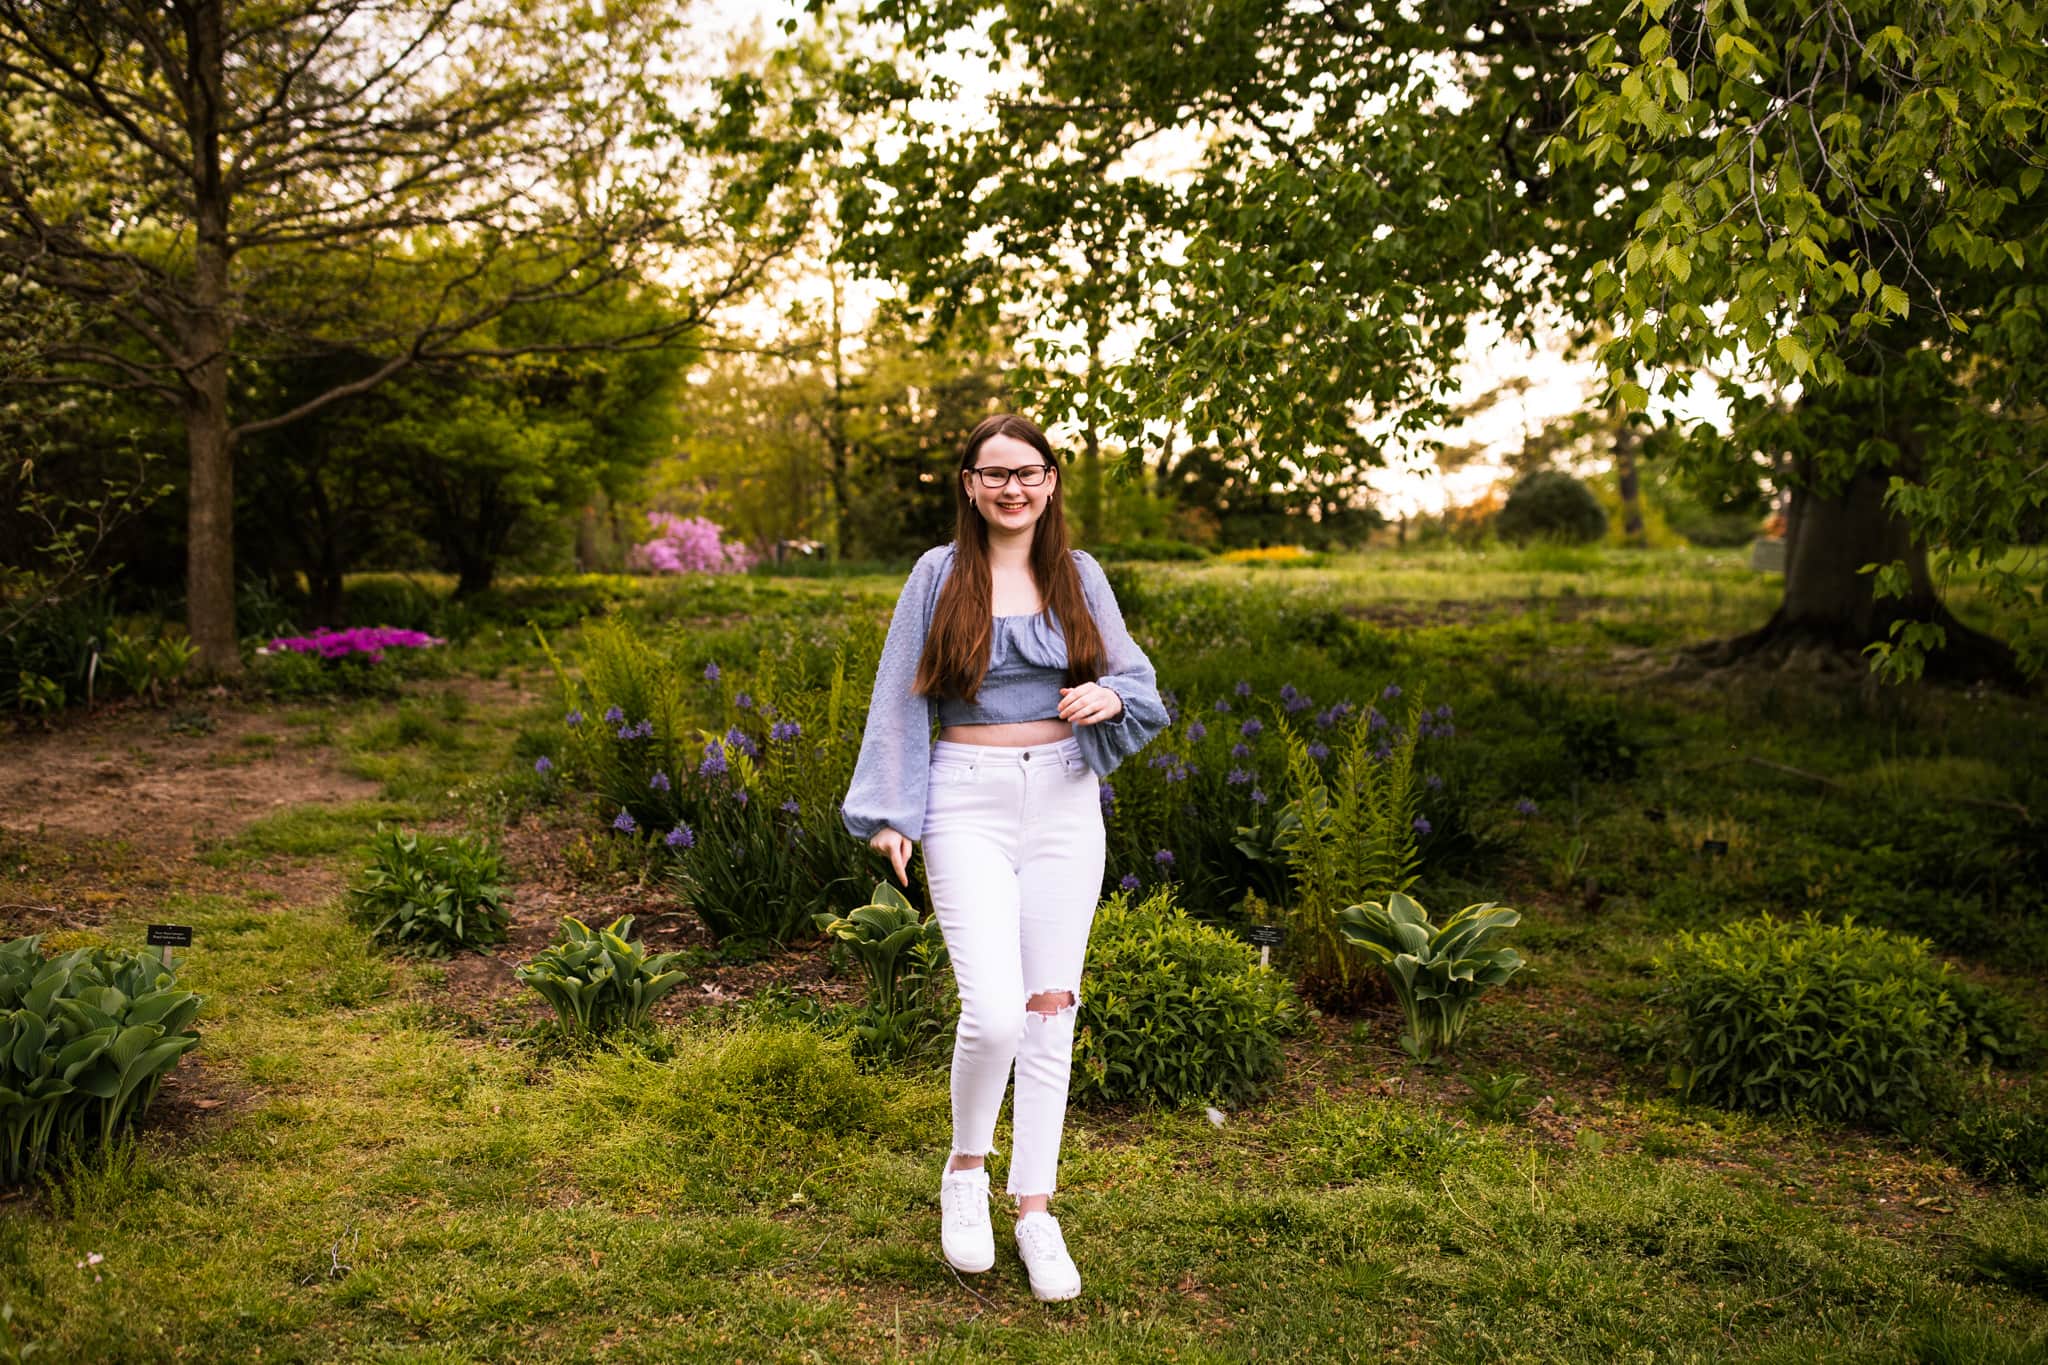 high school senior girl in gardens smiling and standing